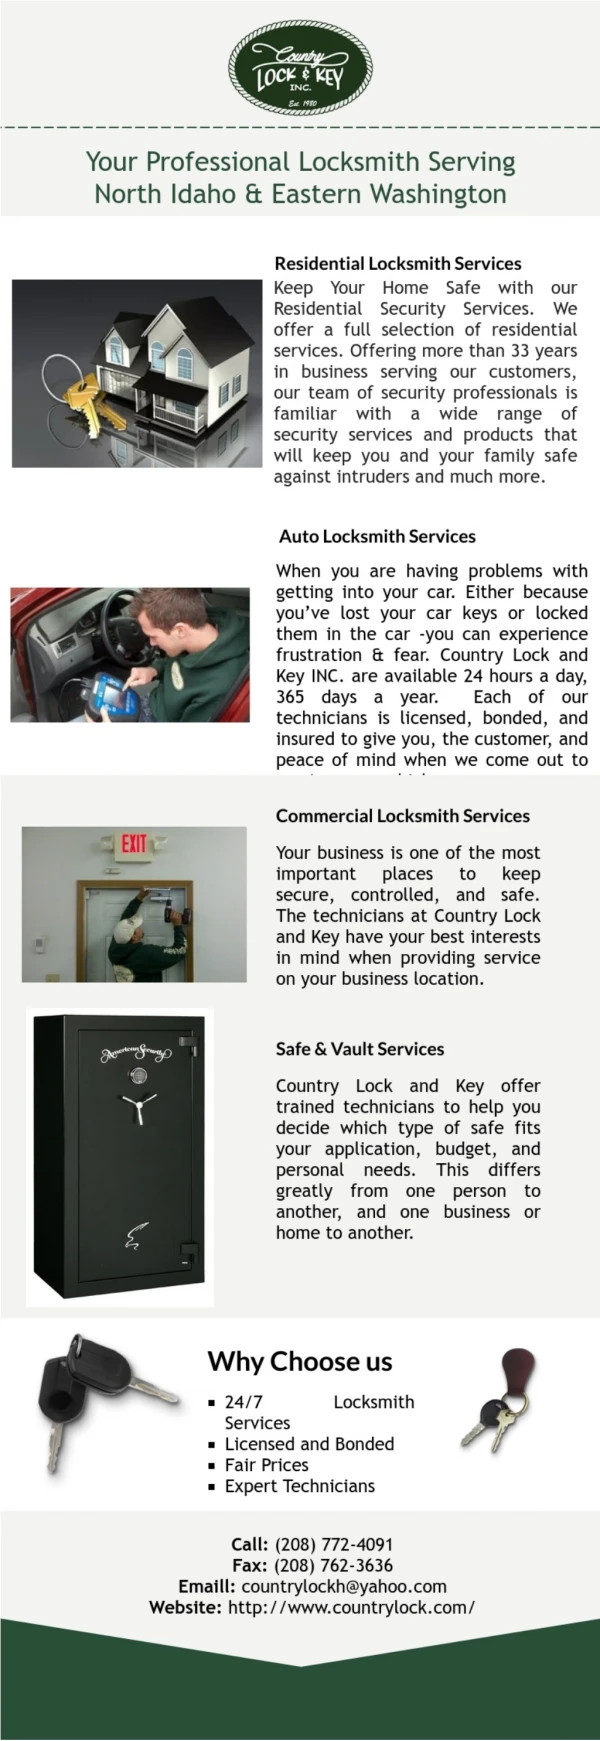 Professional Locksmith Services Provider in Idaho